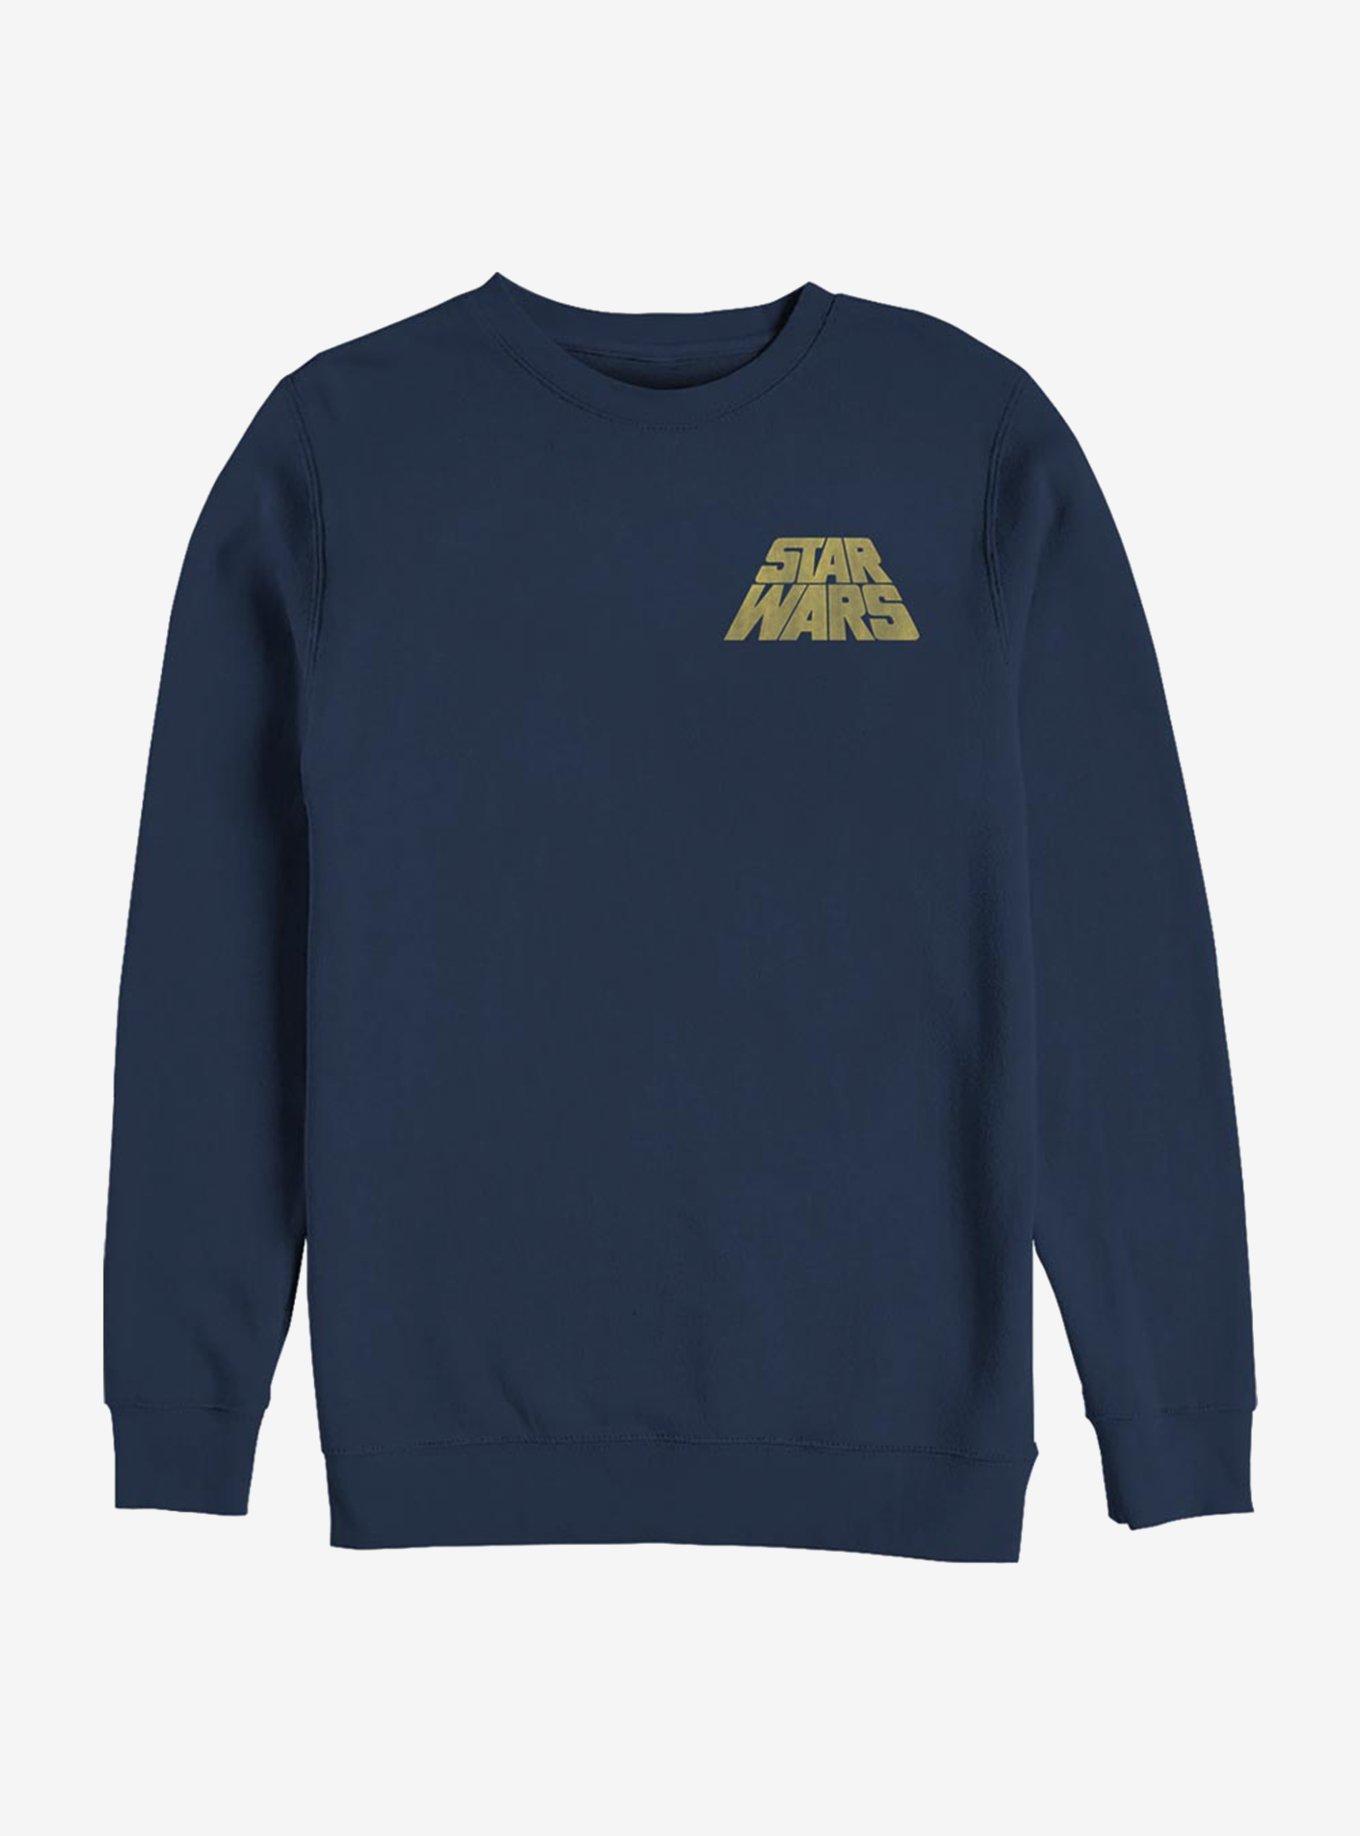 Star Wars Distressed Slant Logo Crew Sweatshirt, NAVY, hi-res